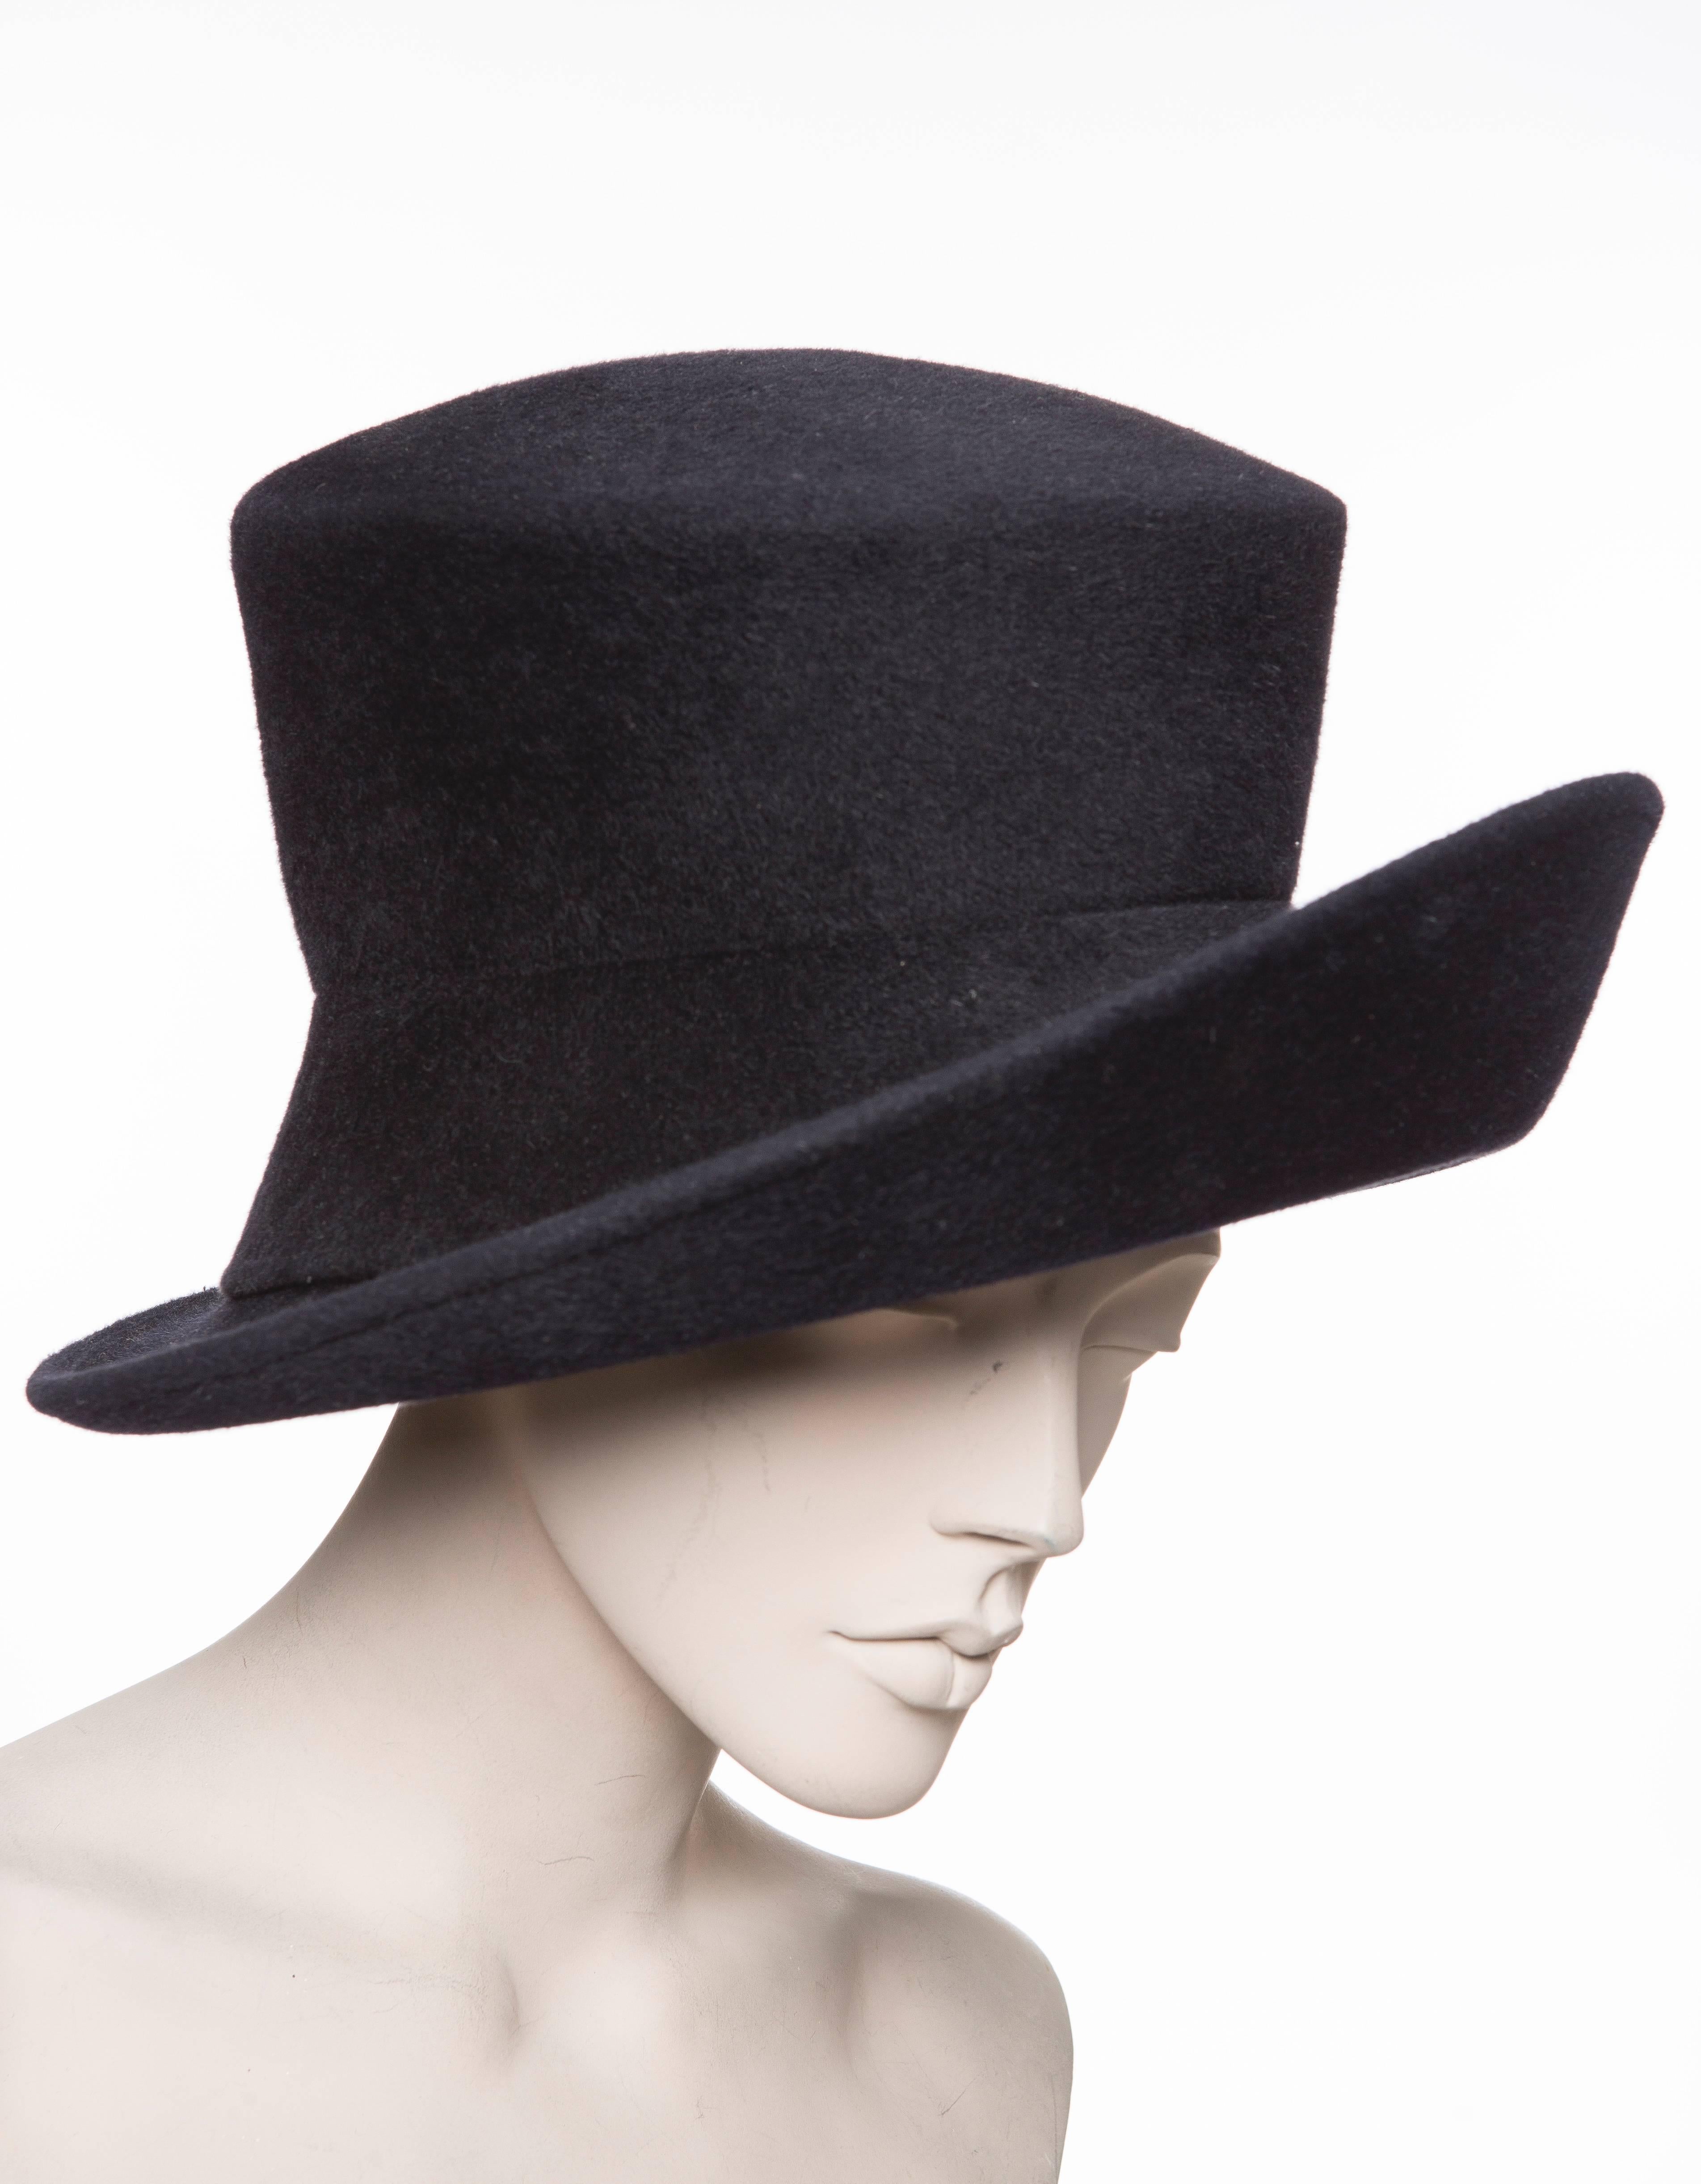 Philip Treacy navy blue wool felt hat.

 Circumference 20